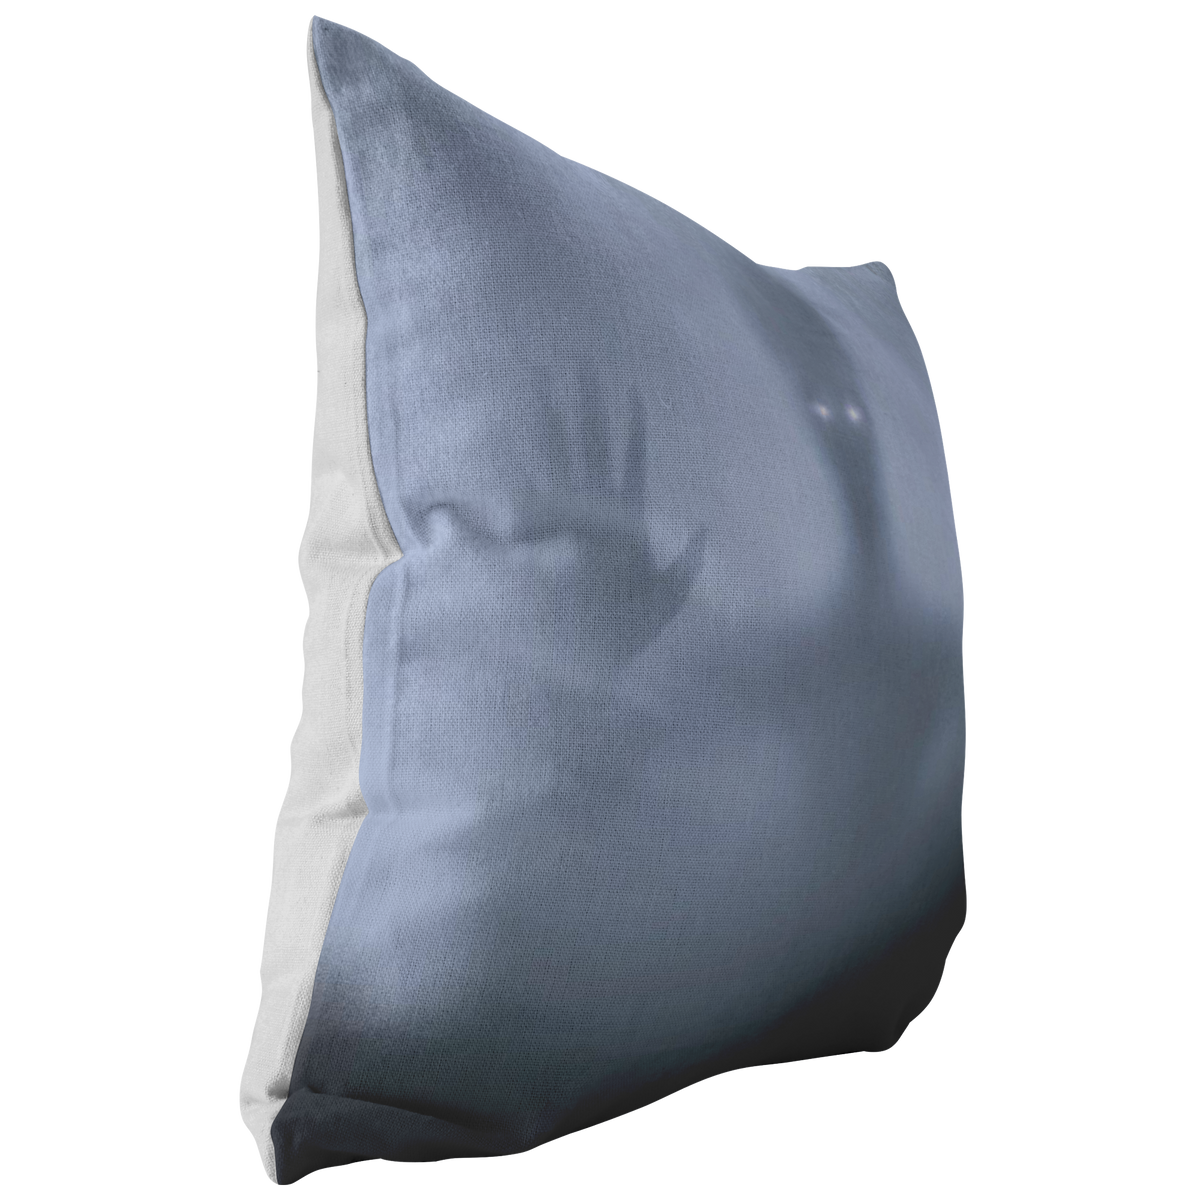 Spooky Alien Throw Pillow Creepy Home Decor Stuffed & Sewn or Zip Cover